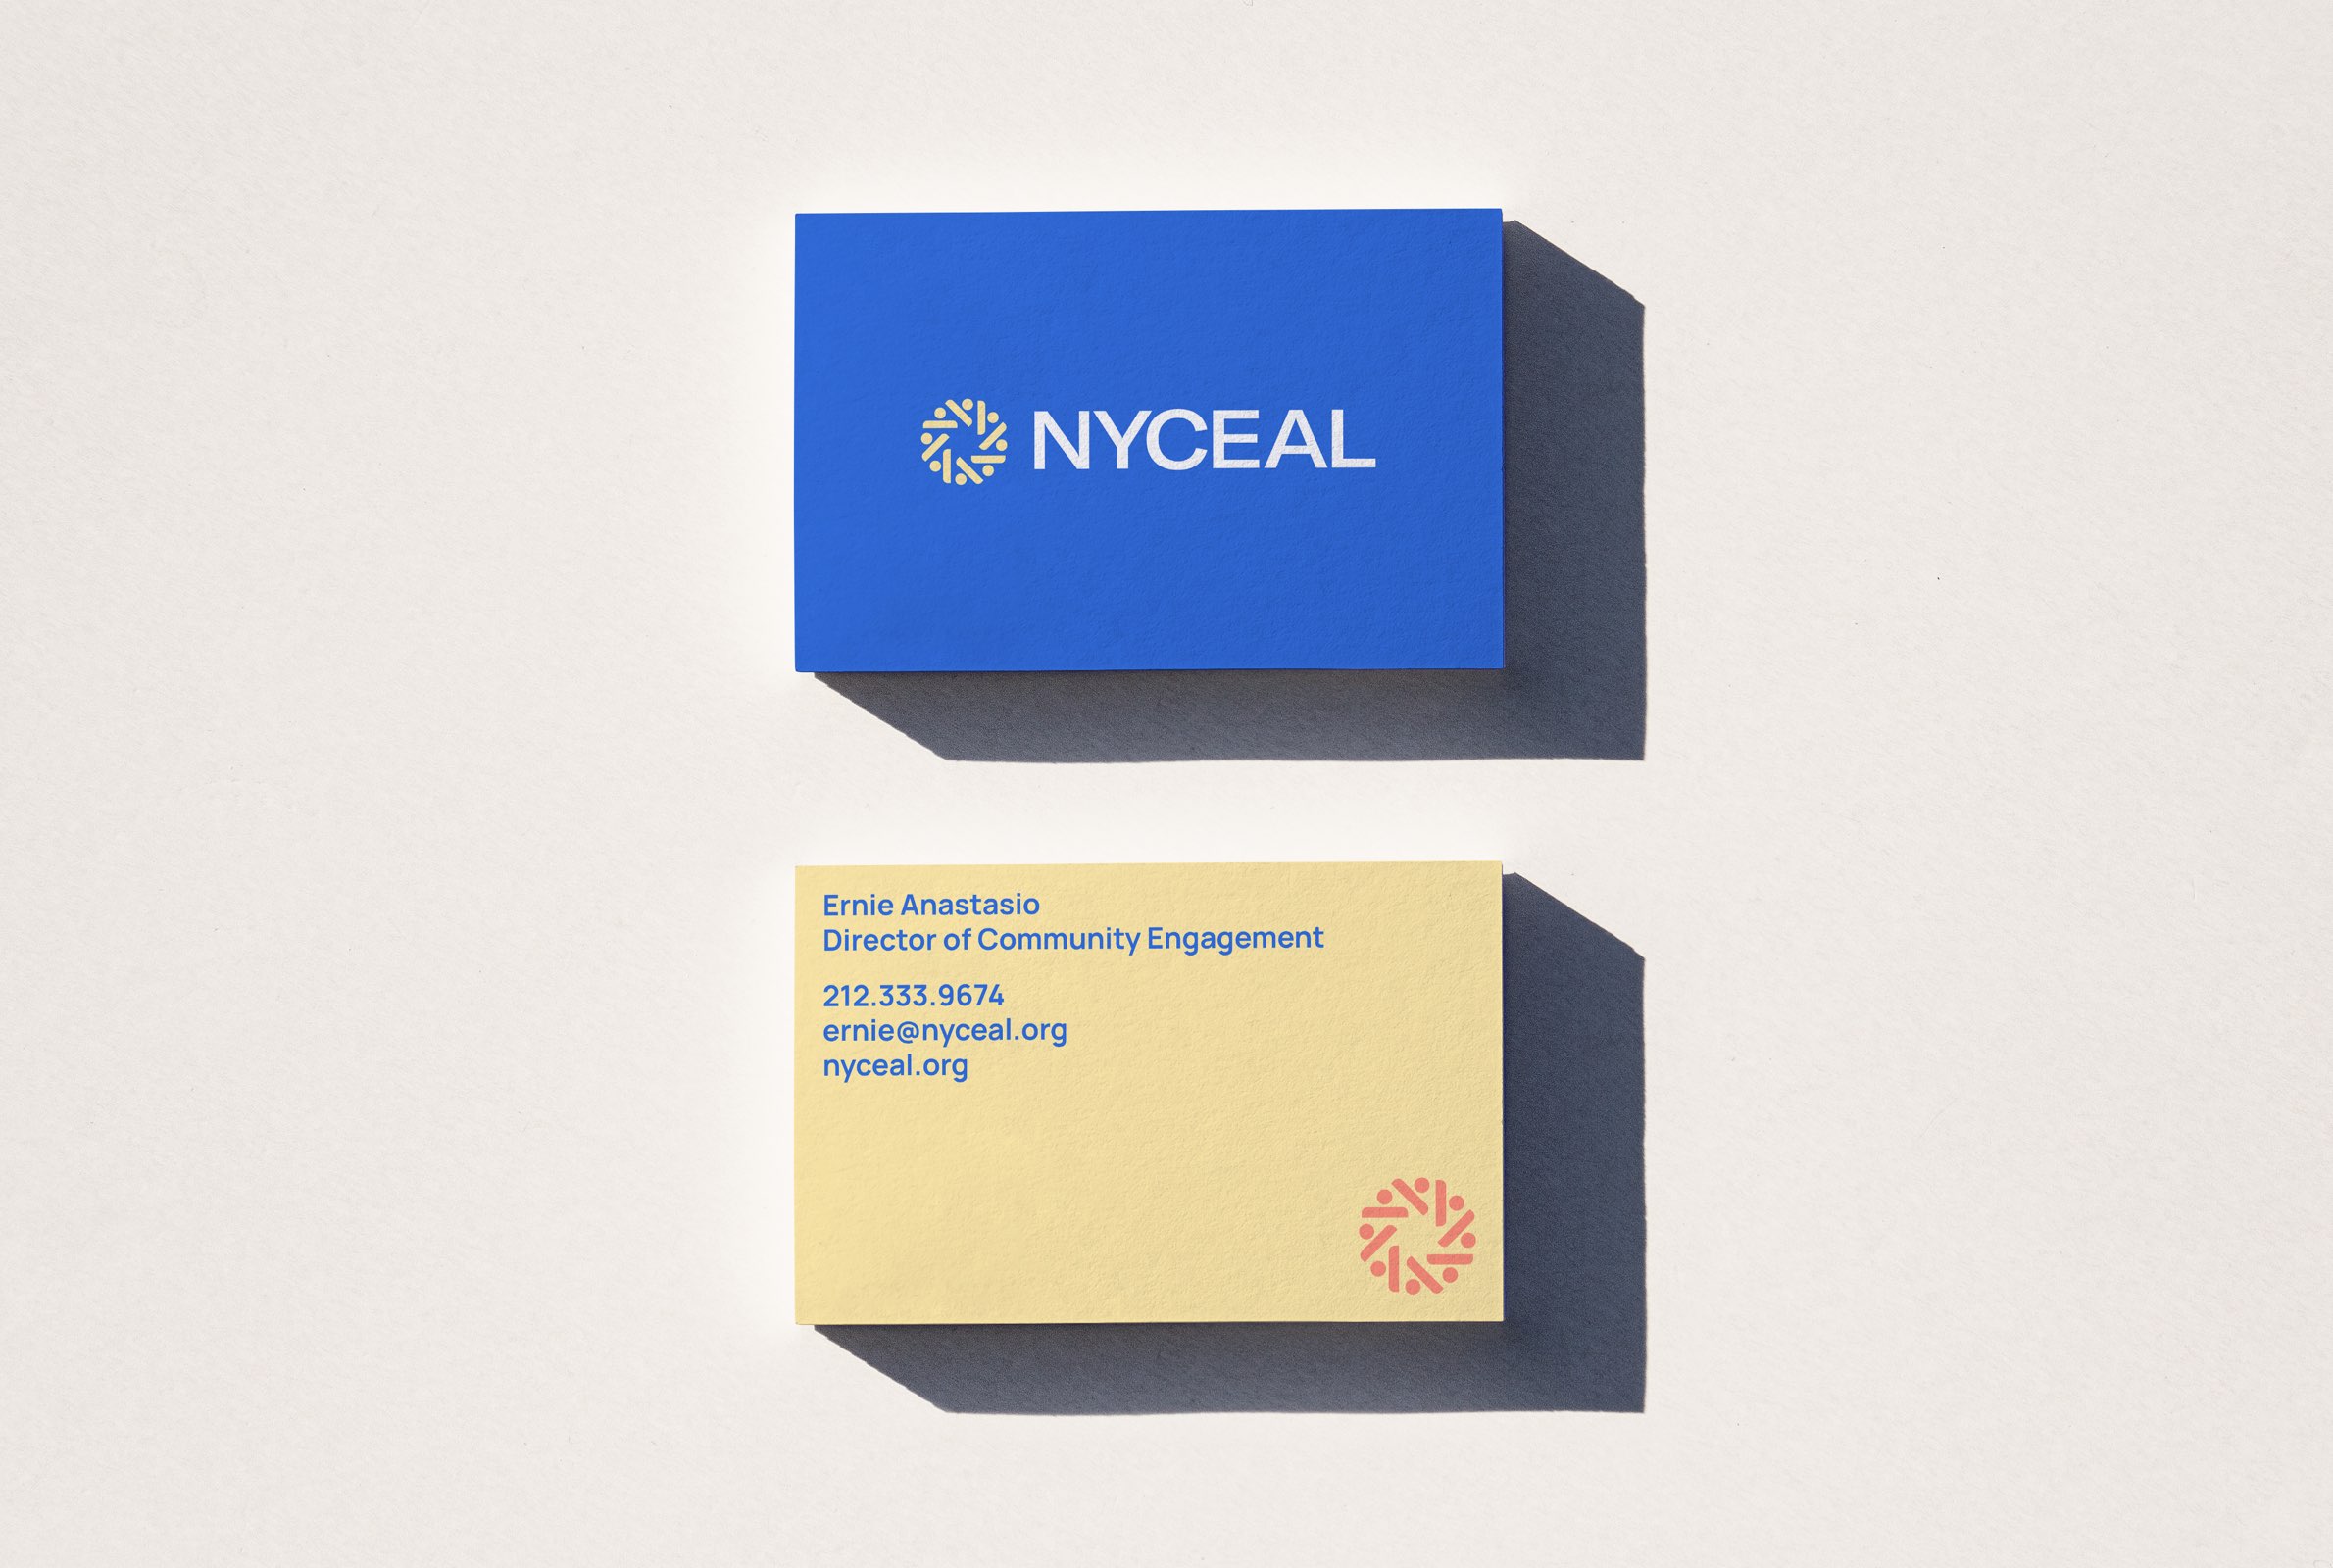 NYCEAL Visual Identity and Web Design - NYX Awards Winner 